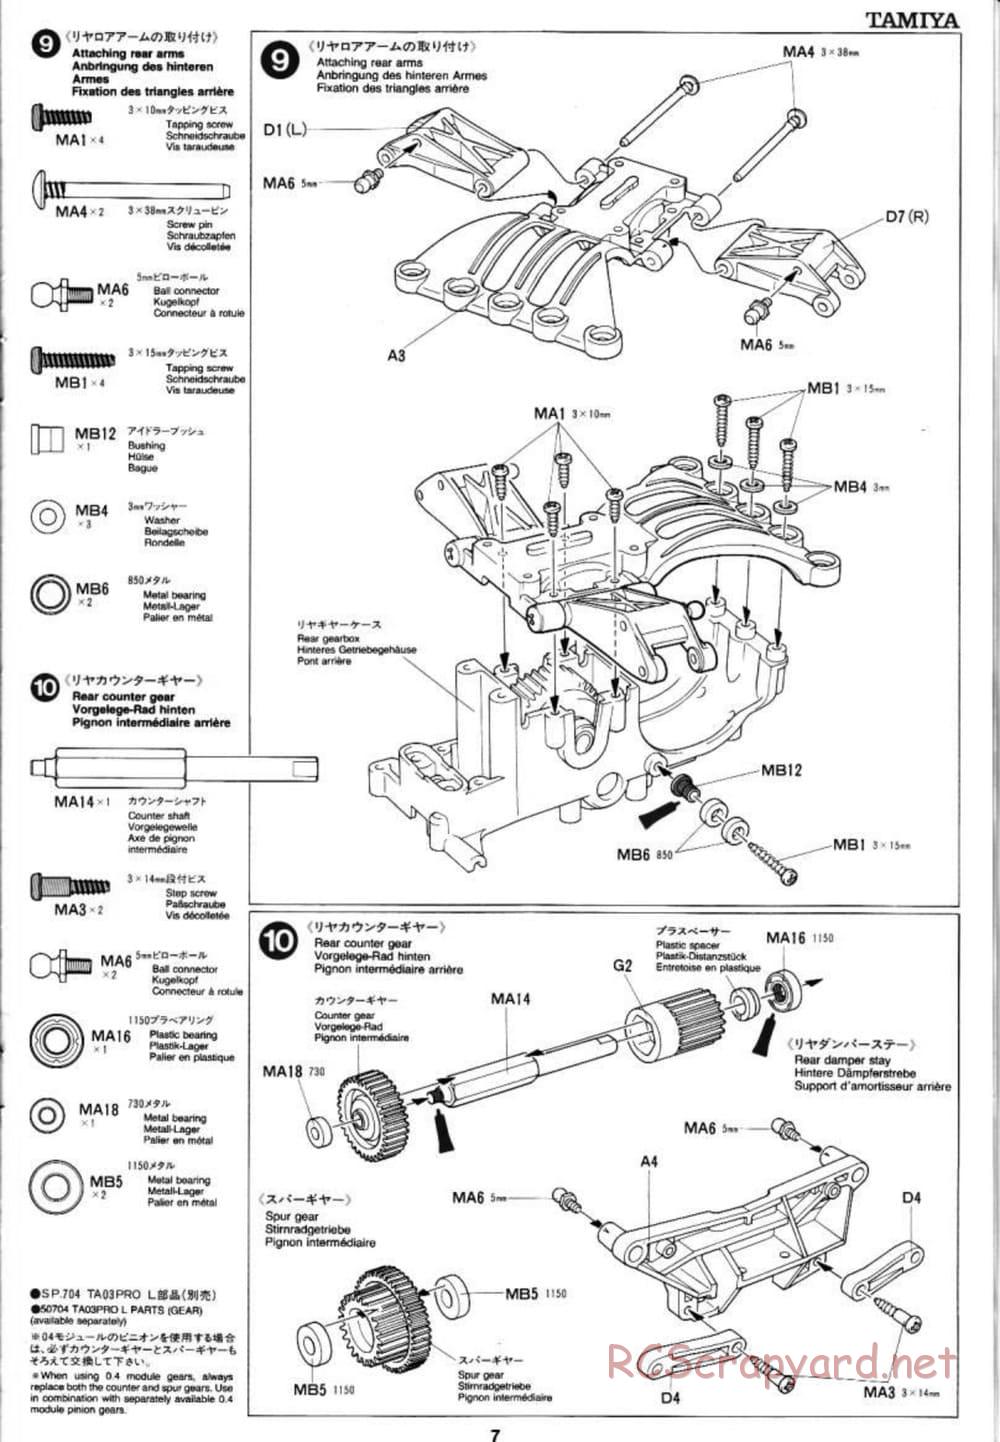 Tamiya - PIAA Porsche 911 - TA-03RS Chassis - Manual - Page 7